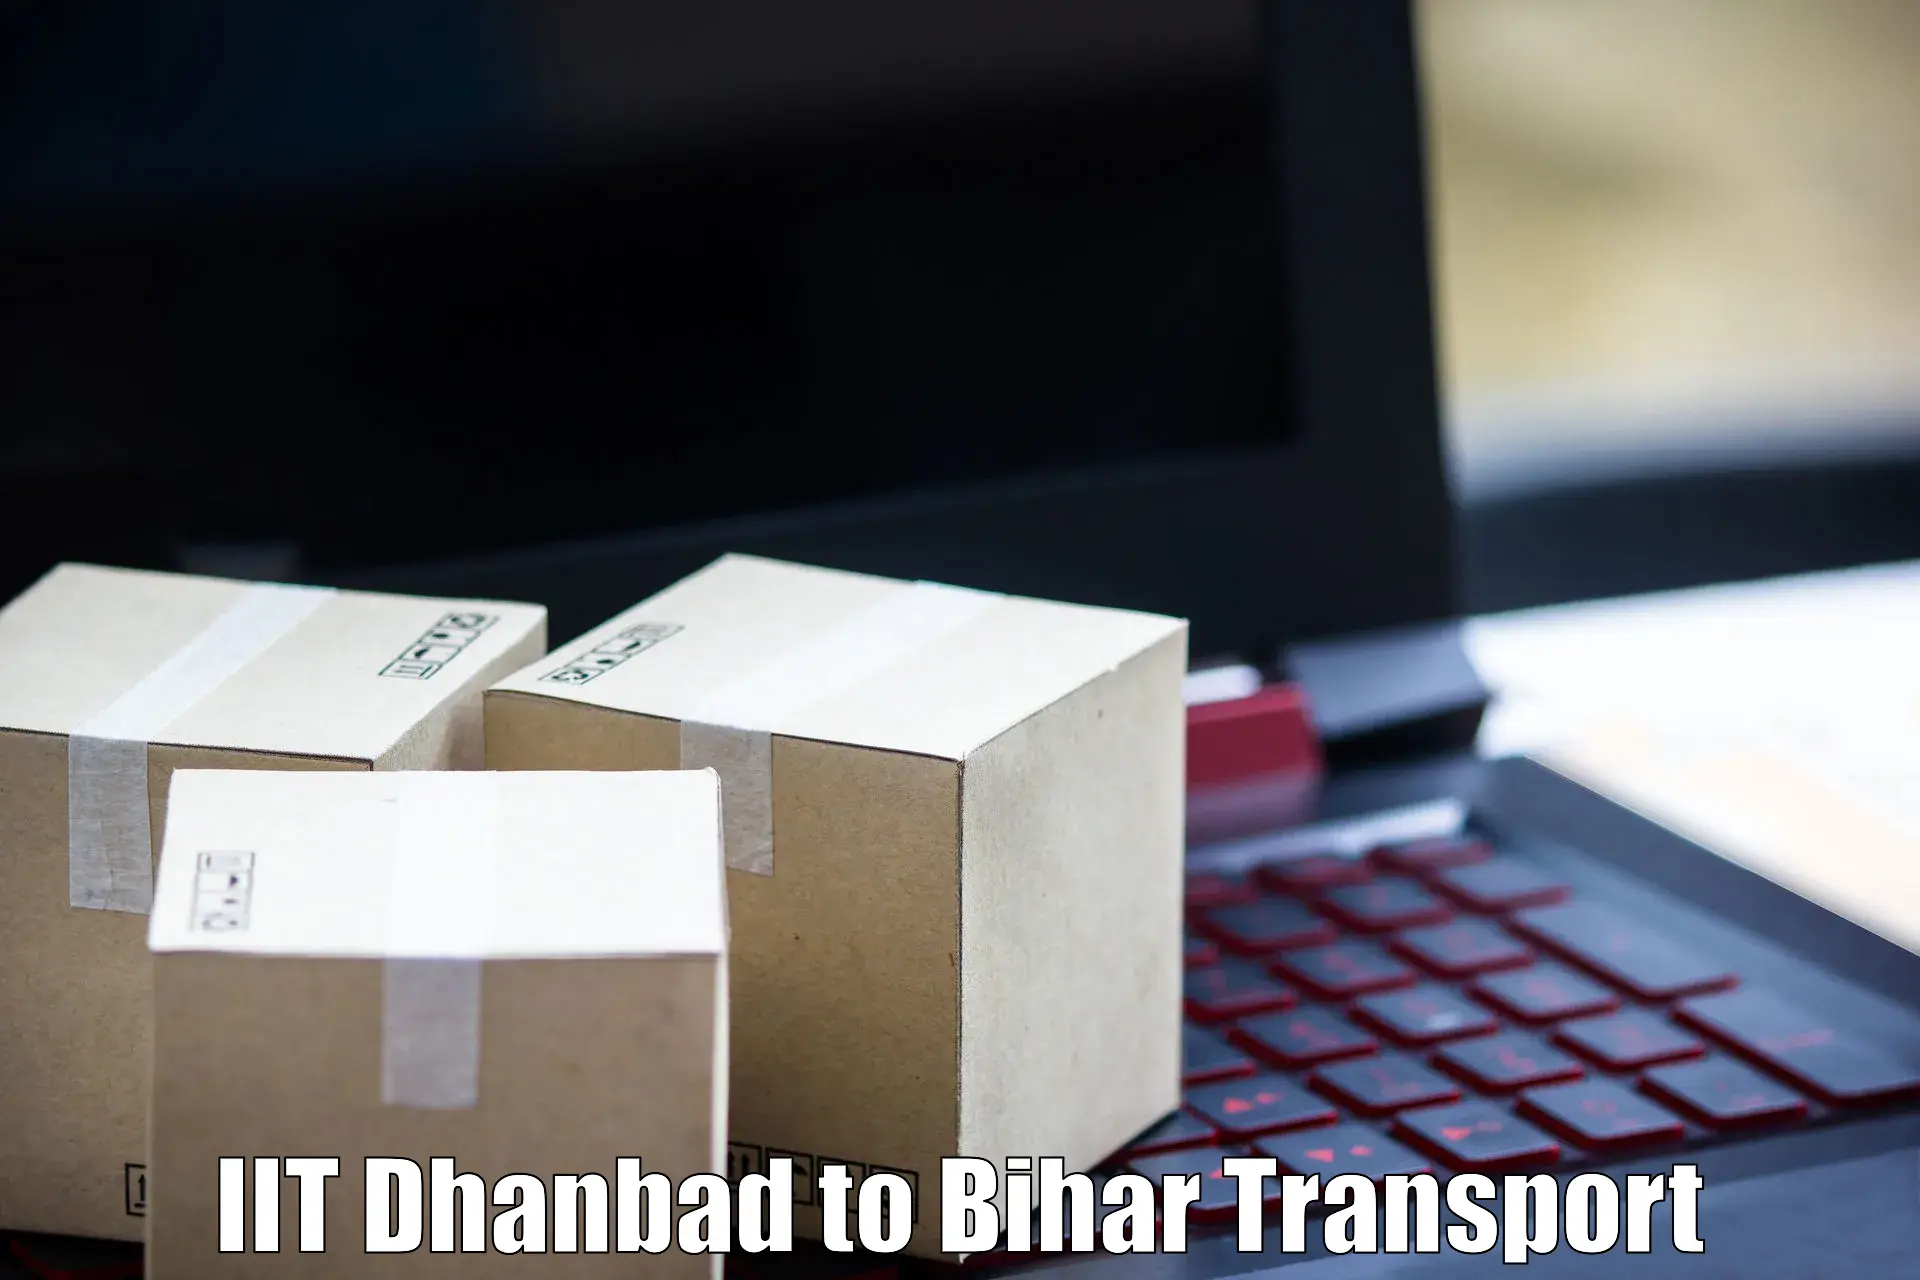 Pick up transport service IIT Dhanbad to Mohiuddin Nagar